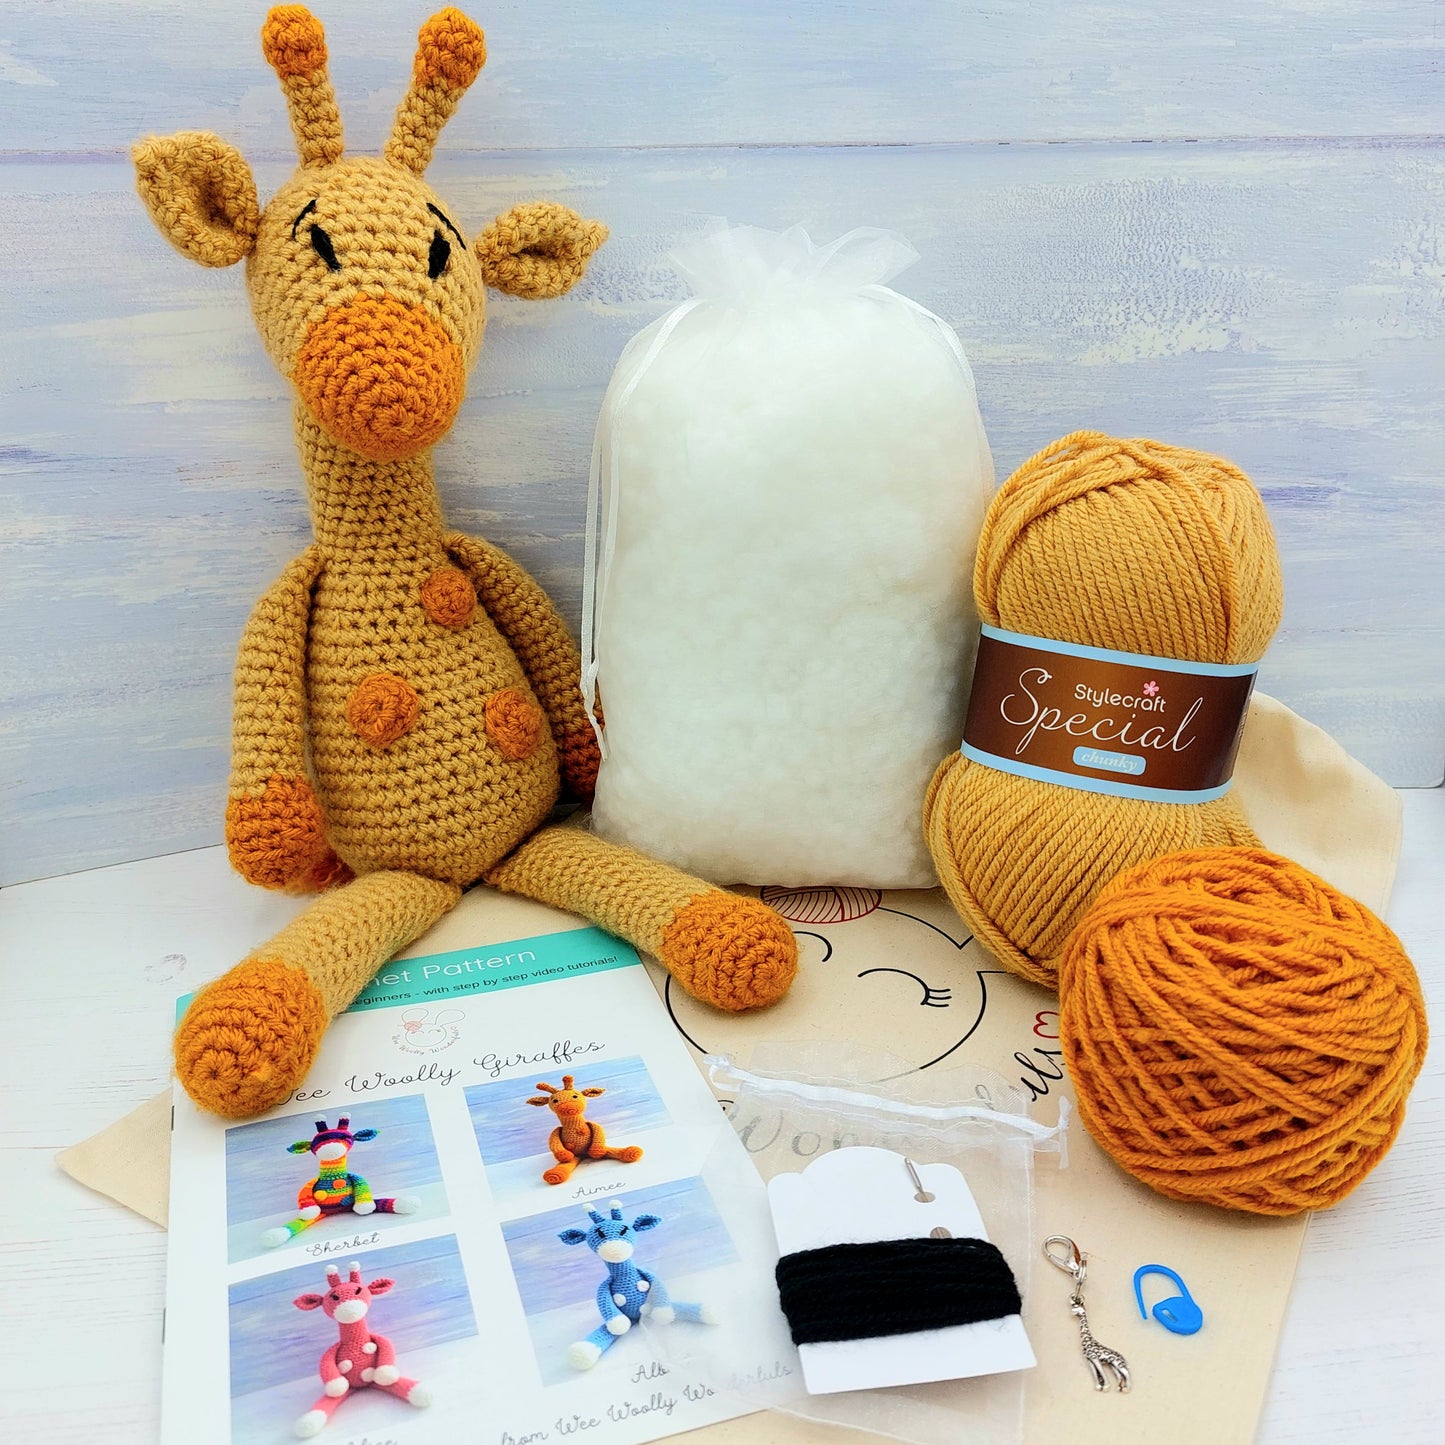 Aimee the Giraffe Crochet Kit - Complete Beginner Kit with Video Tutorials